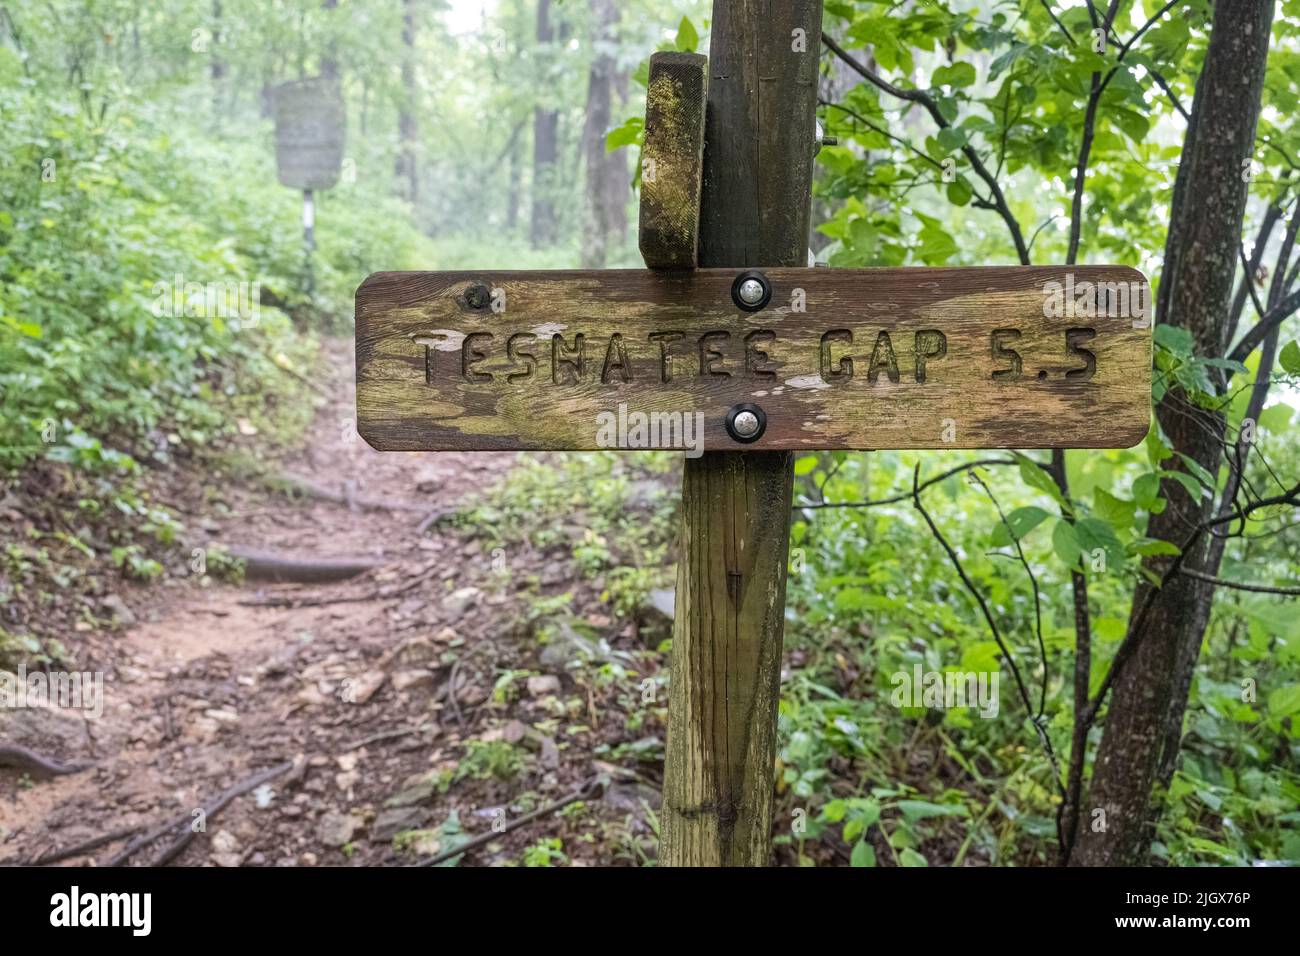 Trail sign toward Tesnatee Gap at Neels Gap on the Appalachian Trail in the Raven Cliffs Wilderness in Northeast Georgia's Blue Ridge Mountains. (USA) Stock Photo